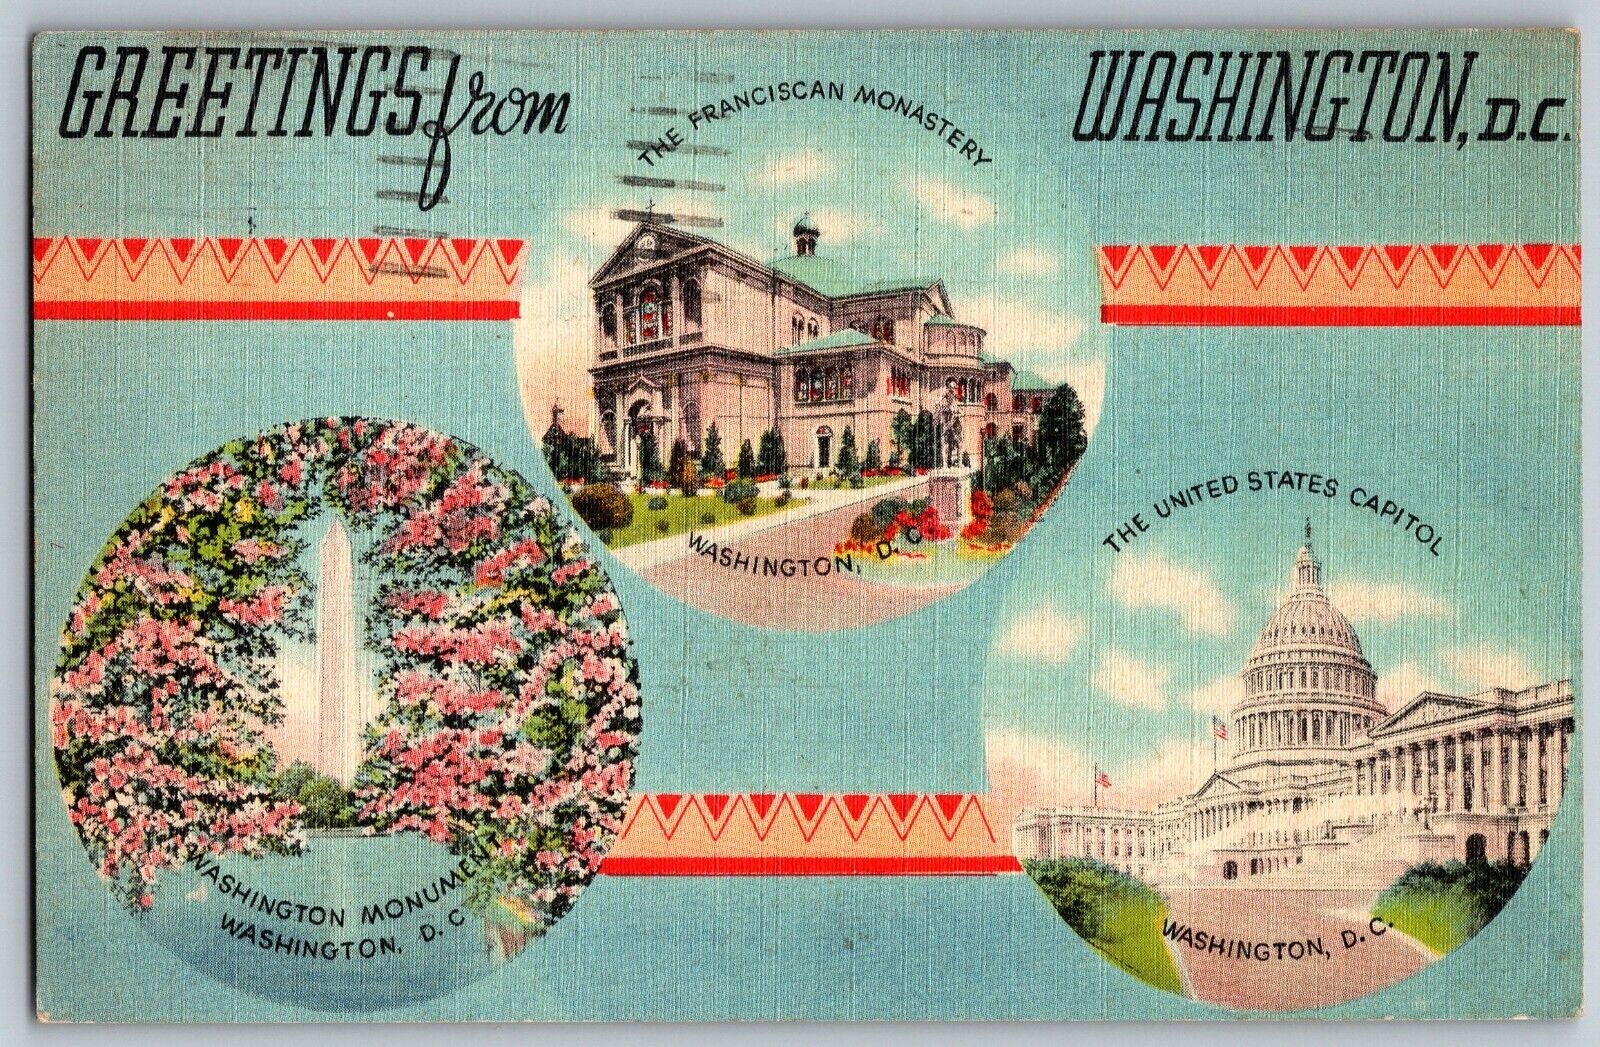 Washington D.C. - Greetings from Washington - Vintage Postcard - Posted